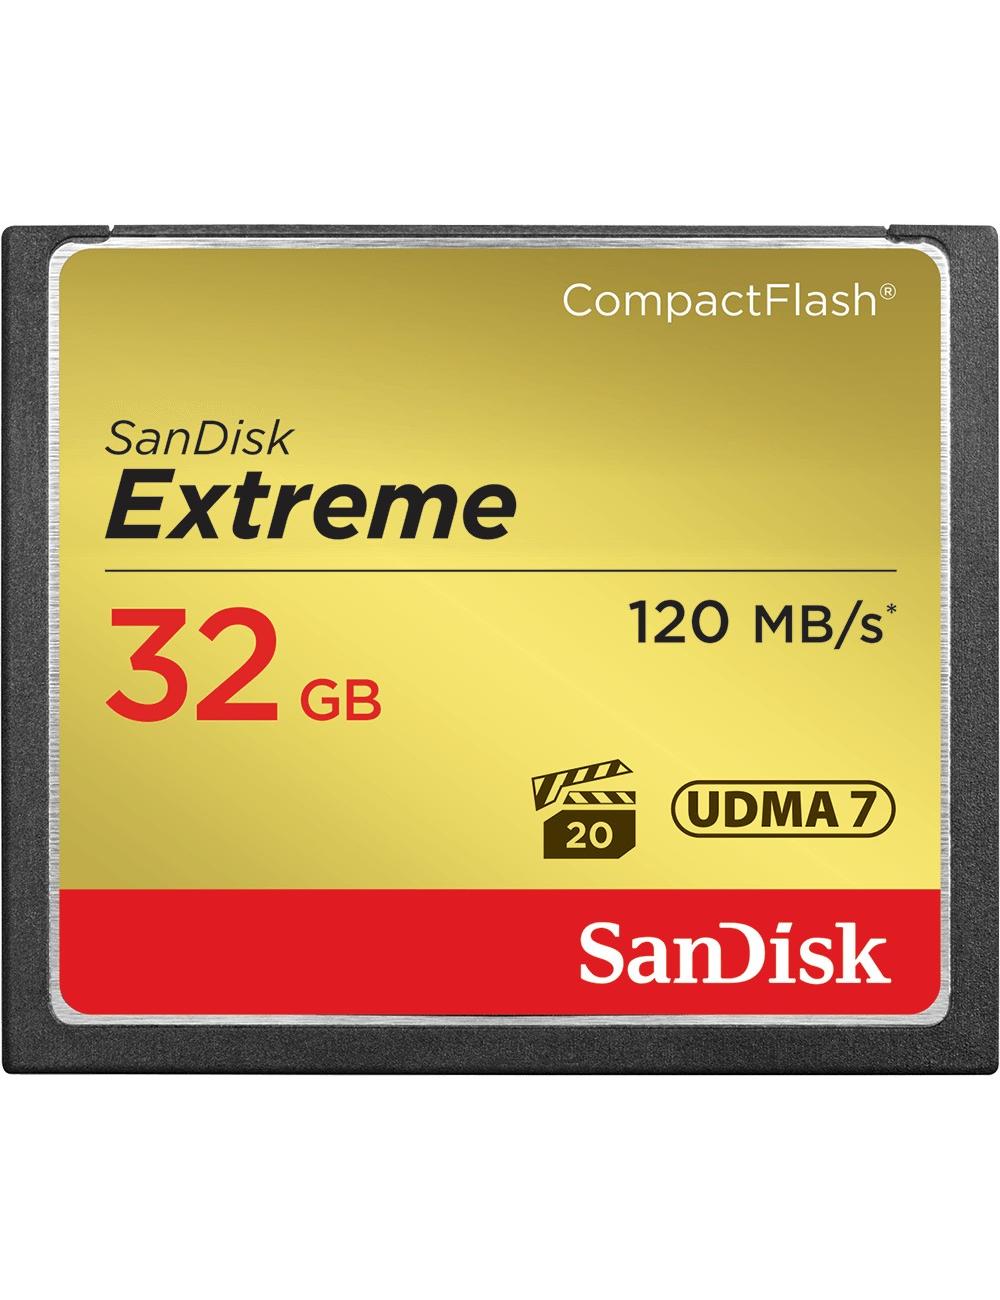 Sandisk COMPACT FLASH EXTREME 120MB/s, 85MB/s write, UDMA7